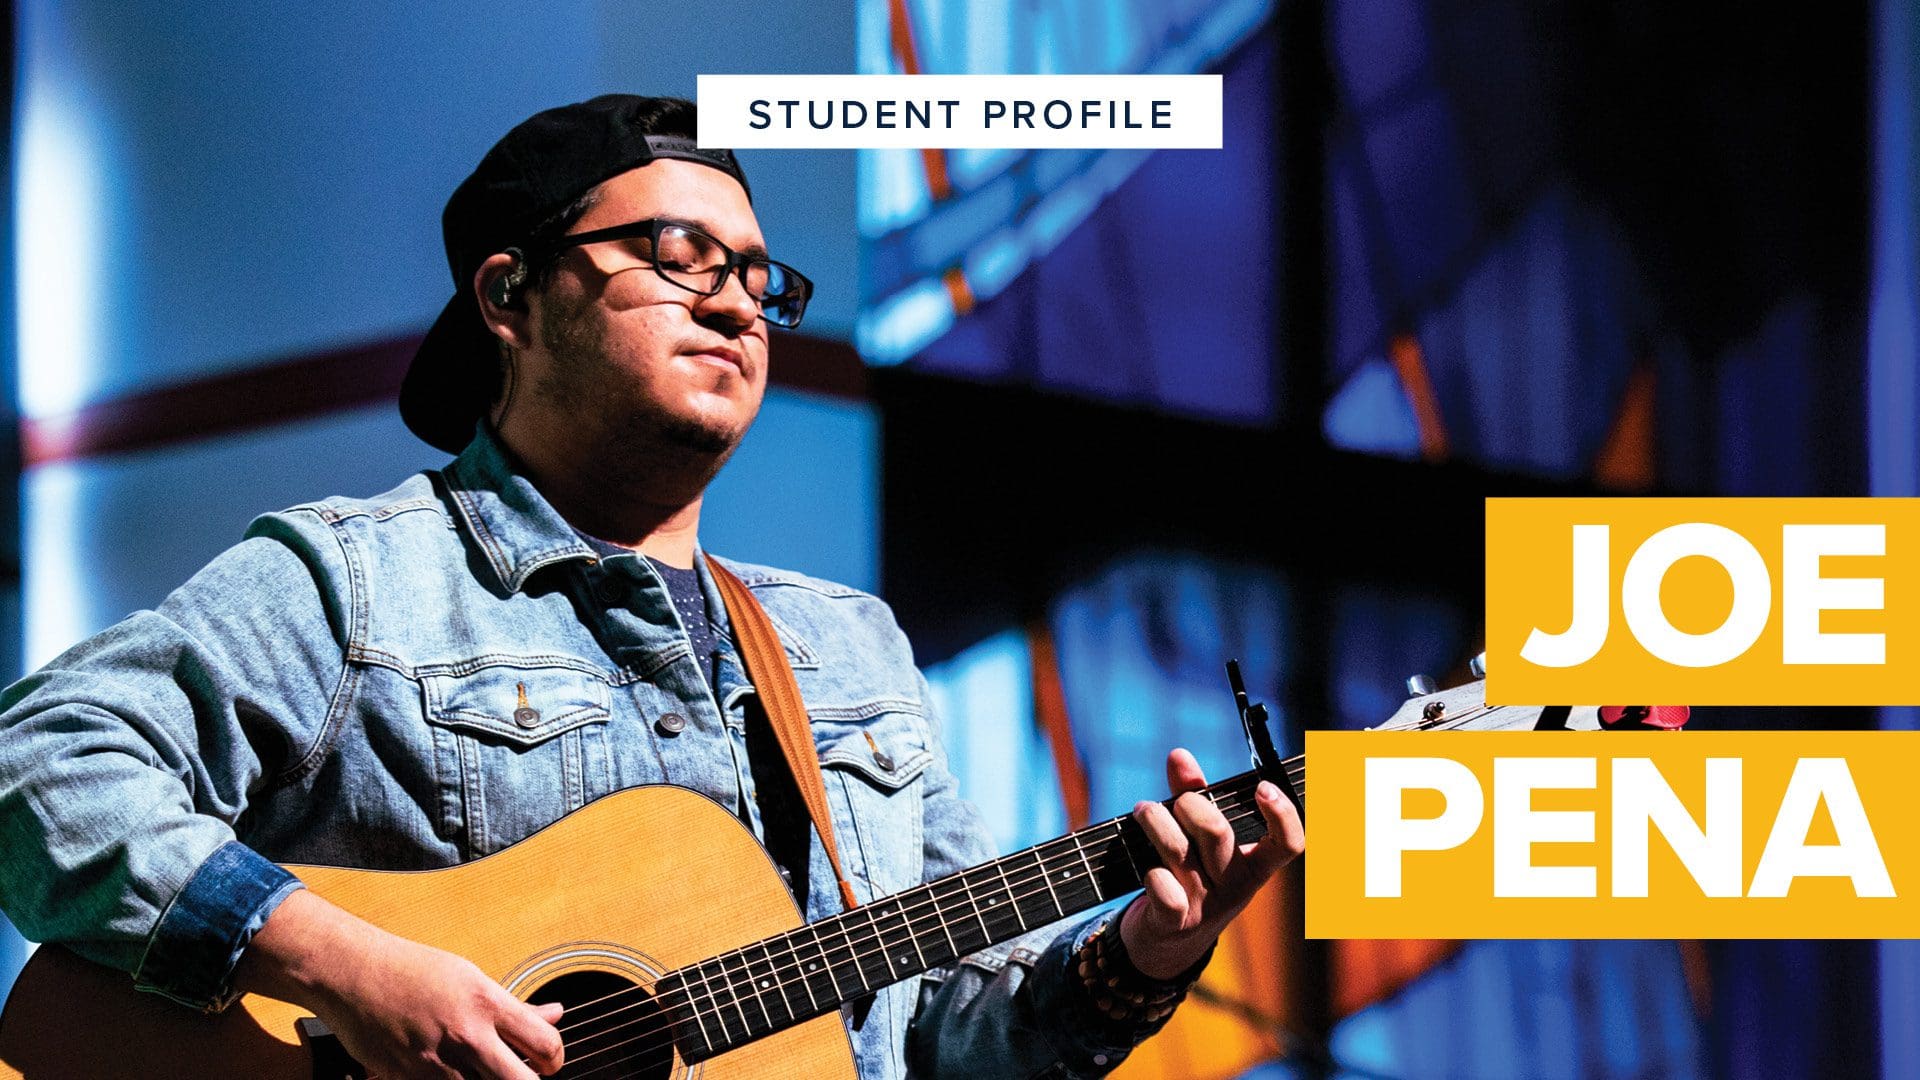 Student Profile: Joe Pena